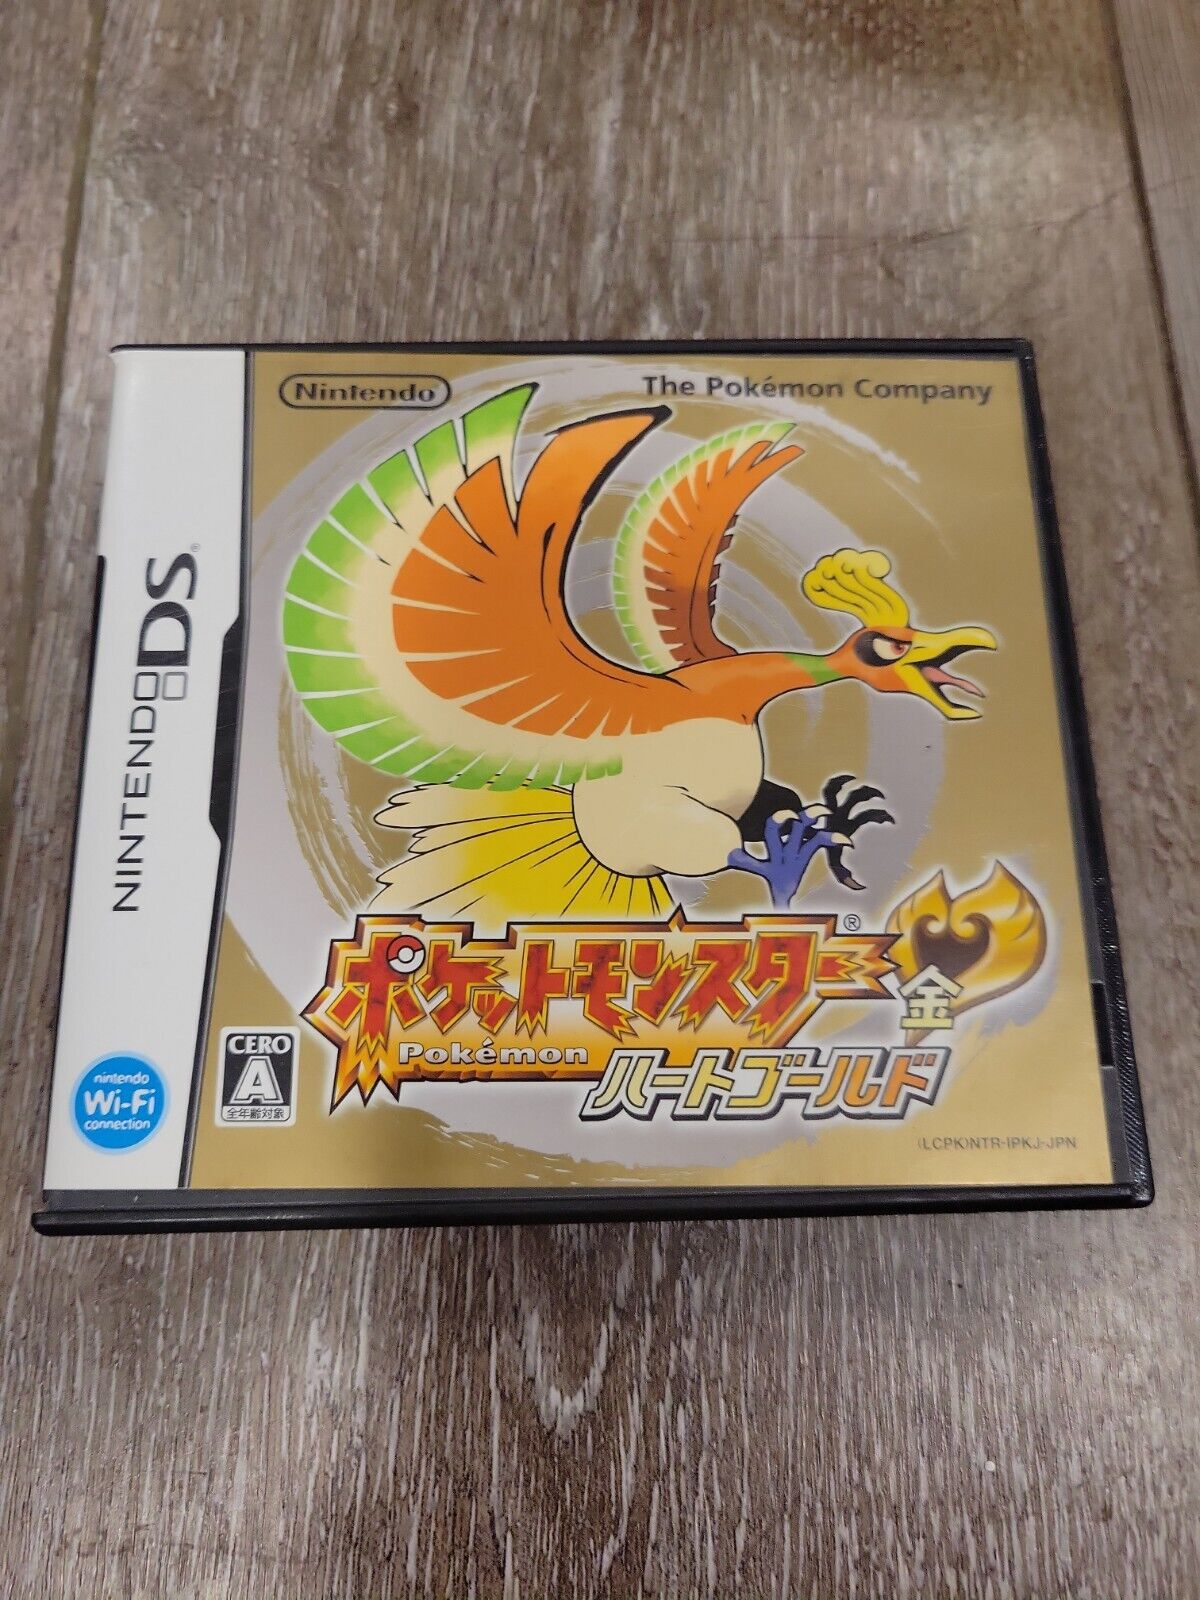 Nintendo DS Pokemon HeartGold Japanese Version CIB Authentic Complete US Seller